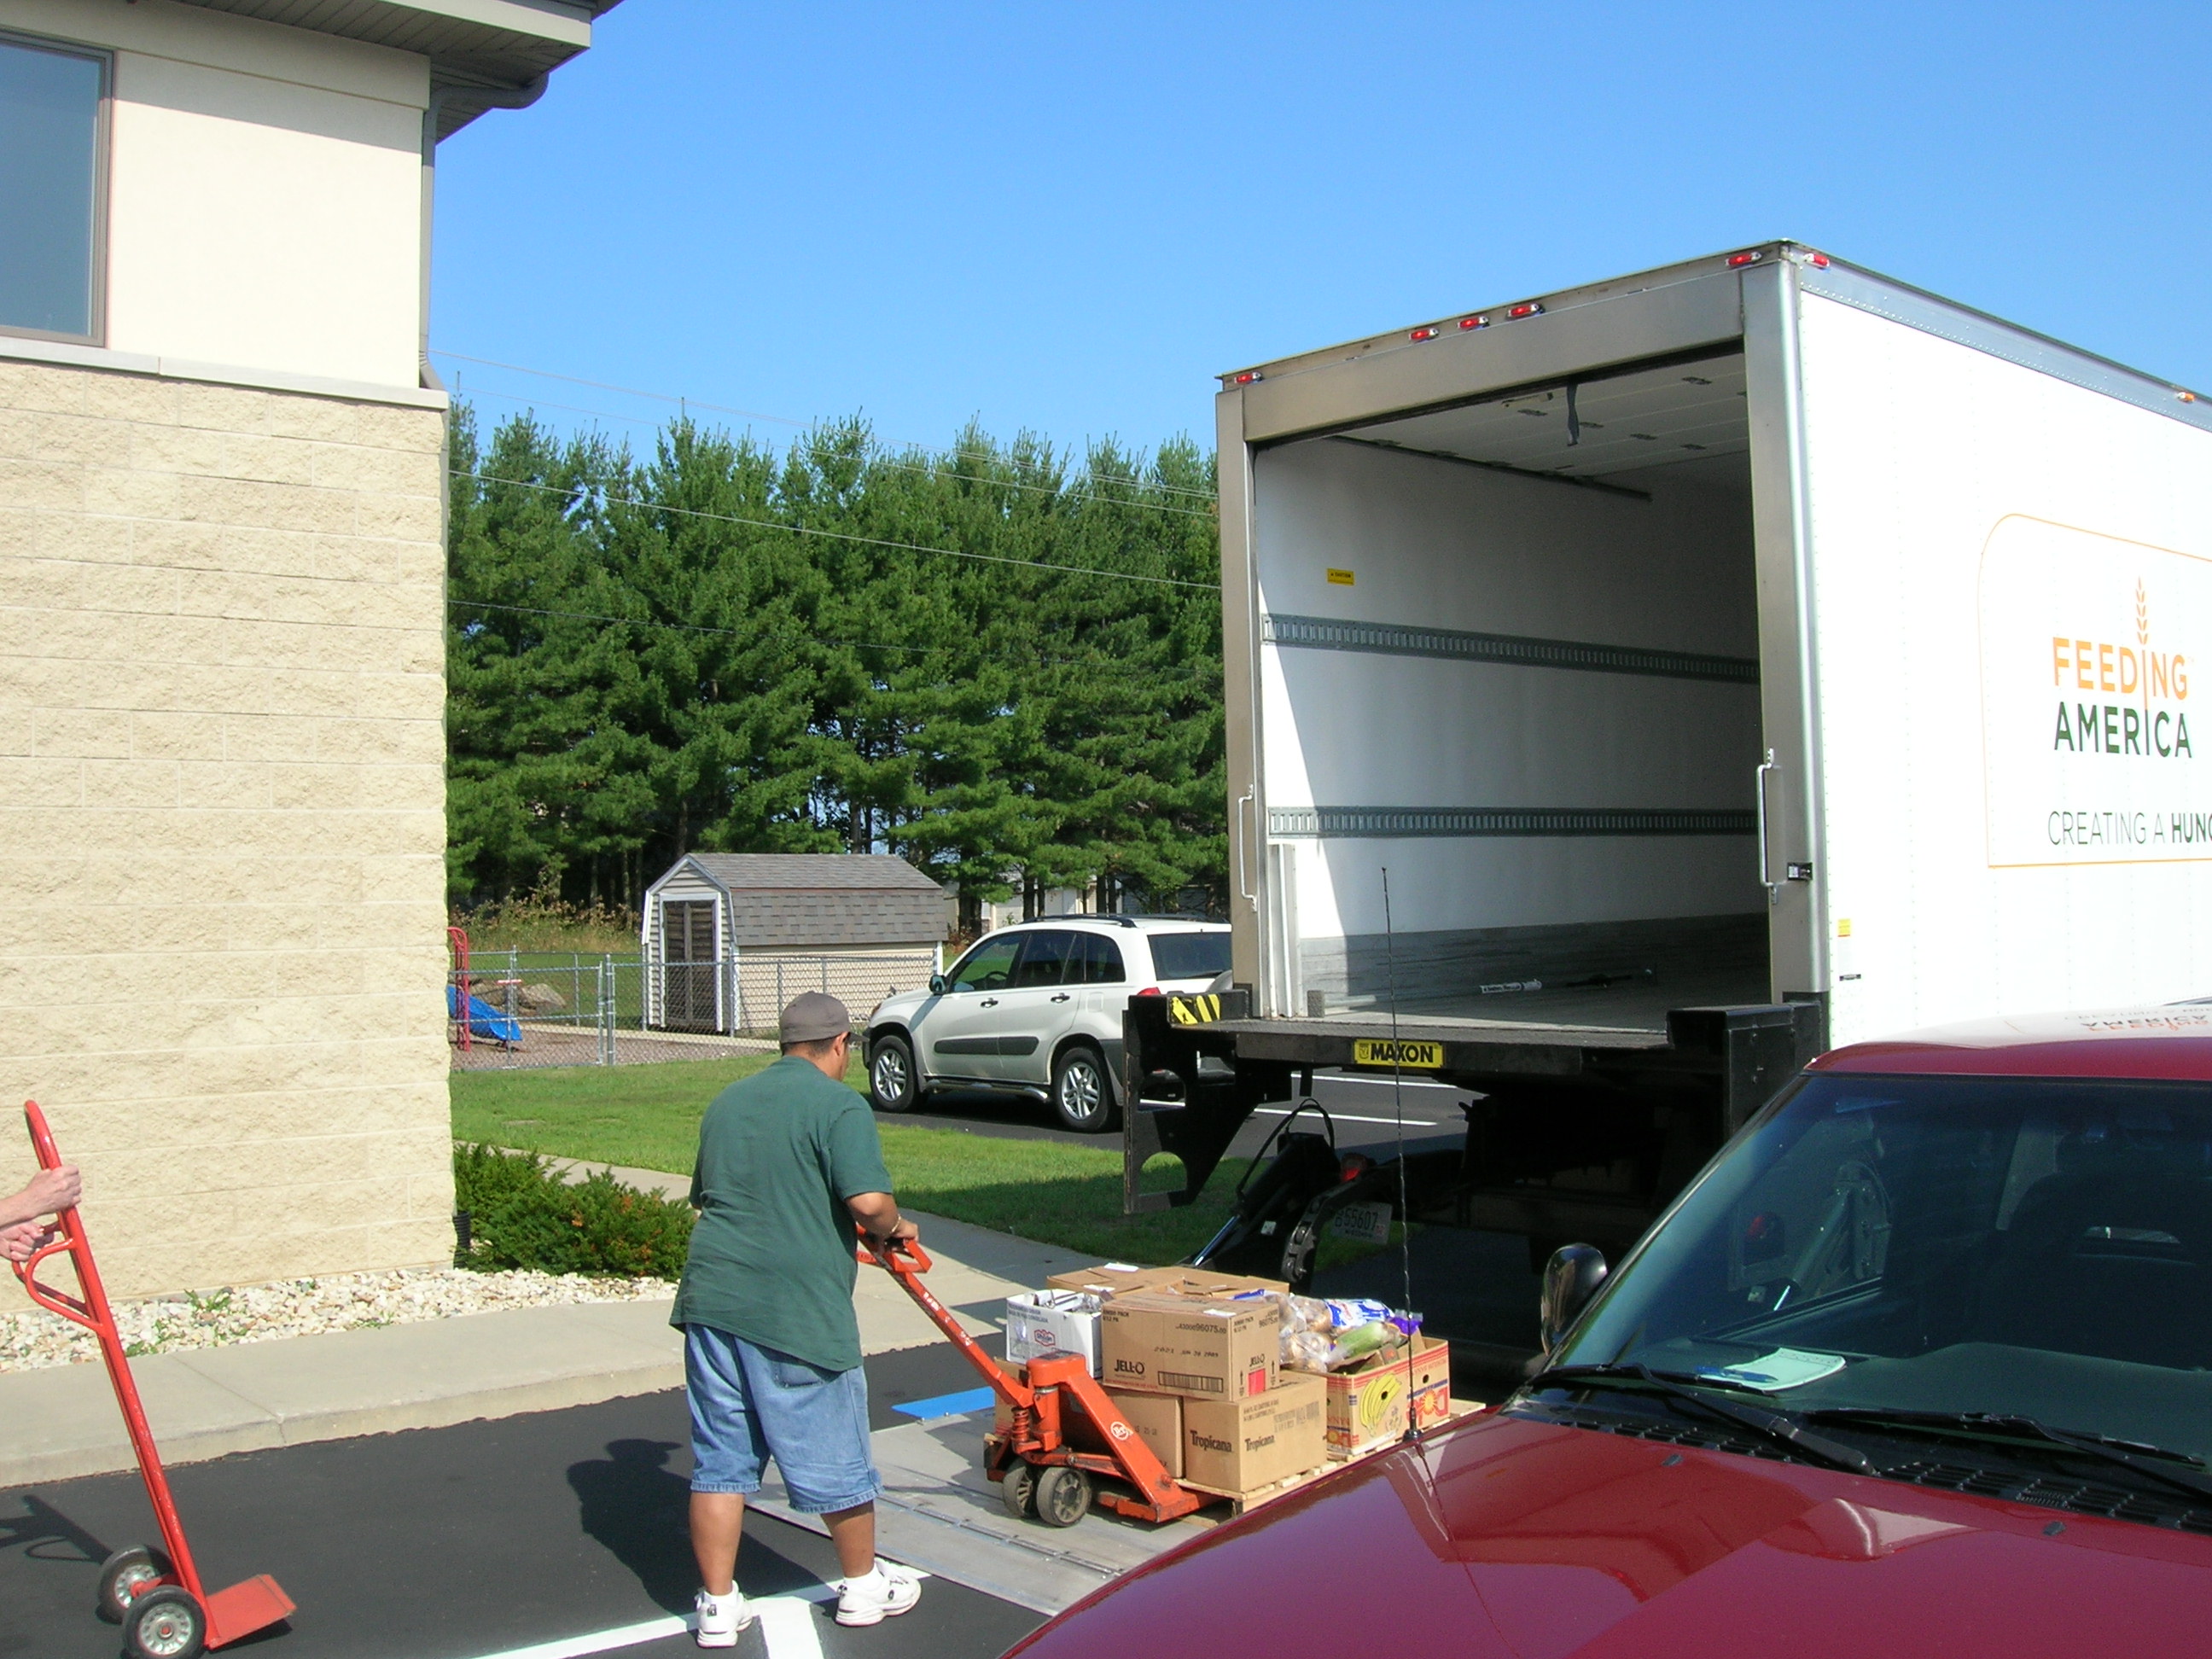 Food pantry volunteer unloads a Second Harvest truck